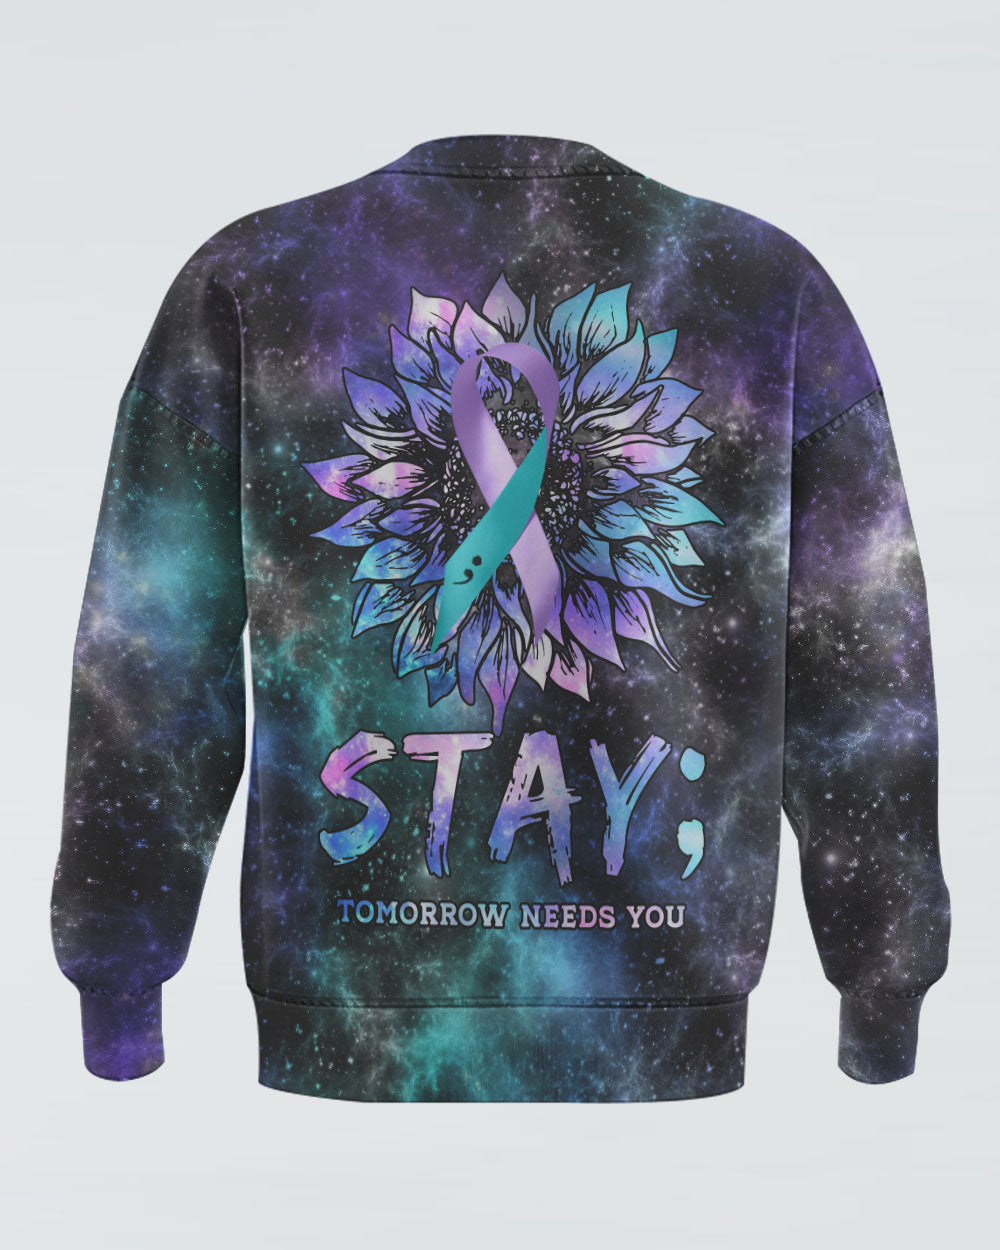 Stay Tomorrow Needs You Women's Suicide Prevention Awareness Sweatshirt